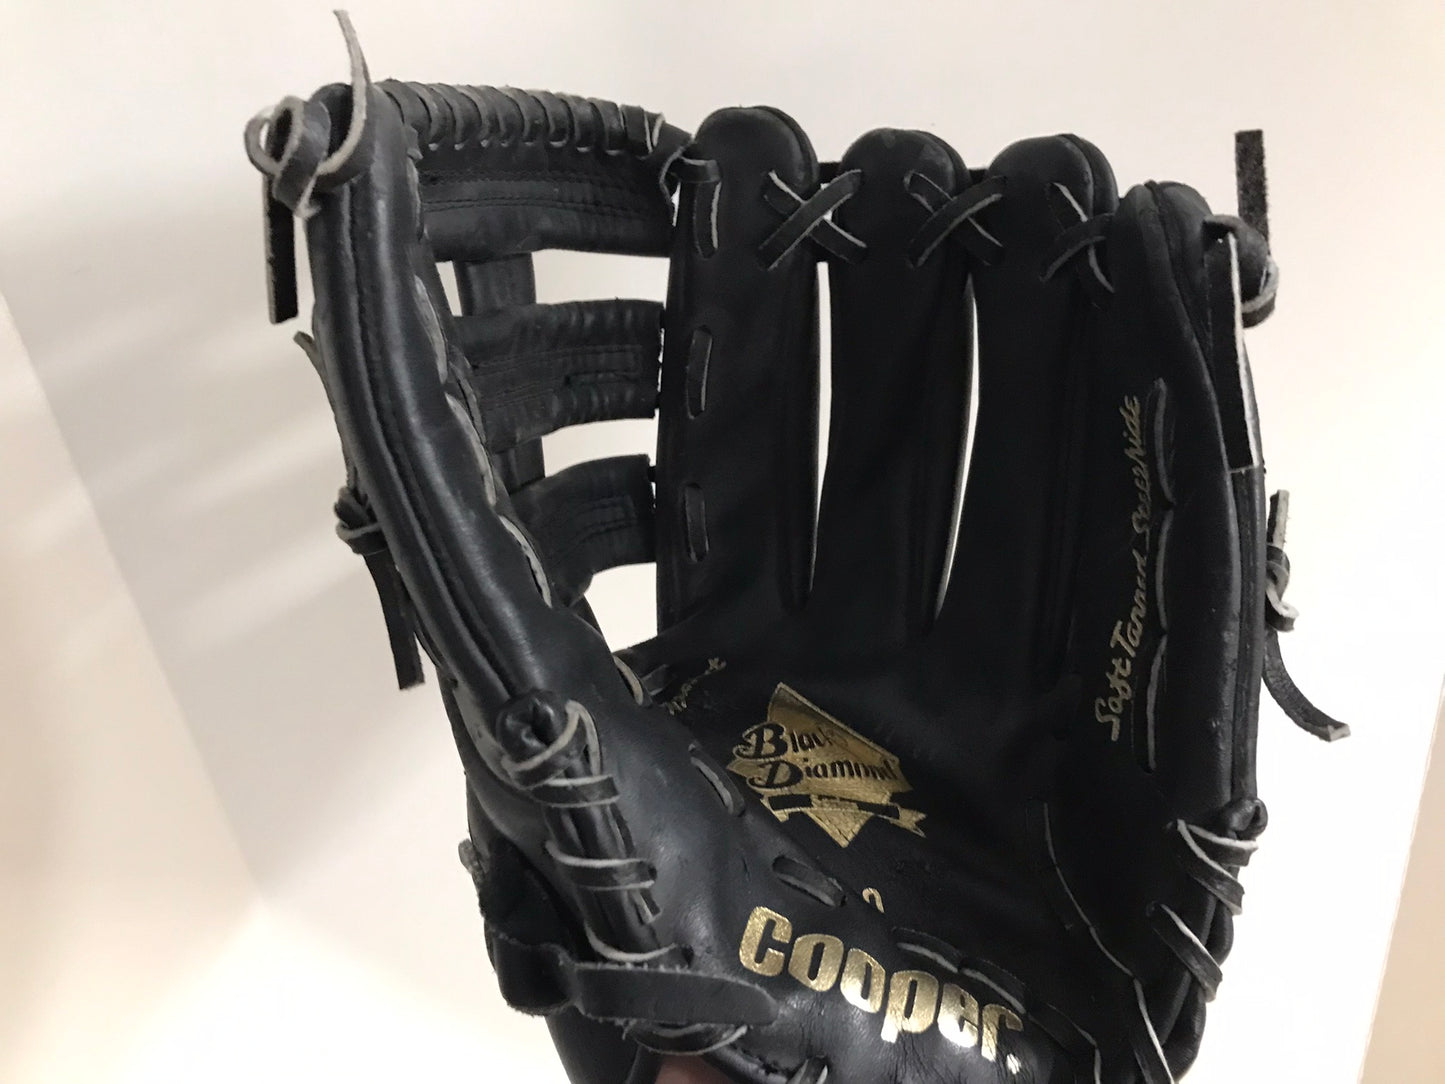 Baseball Glove Adult Size 12 inch Cooper Black Diamond Black Leather Fits on Left Hand